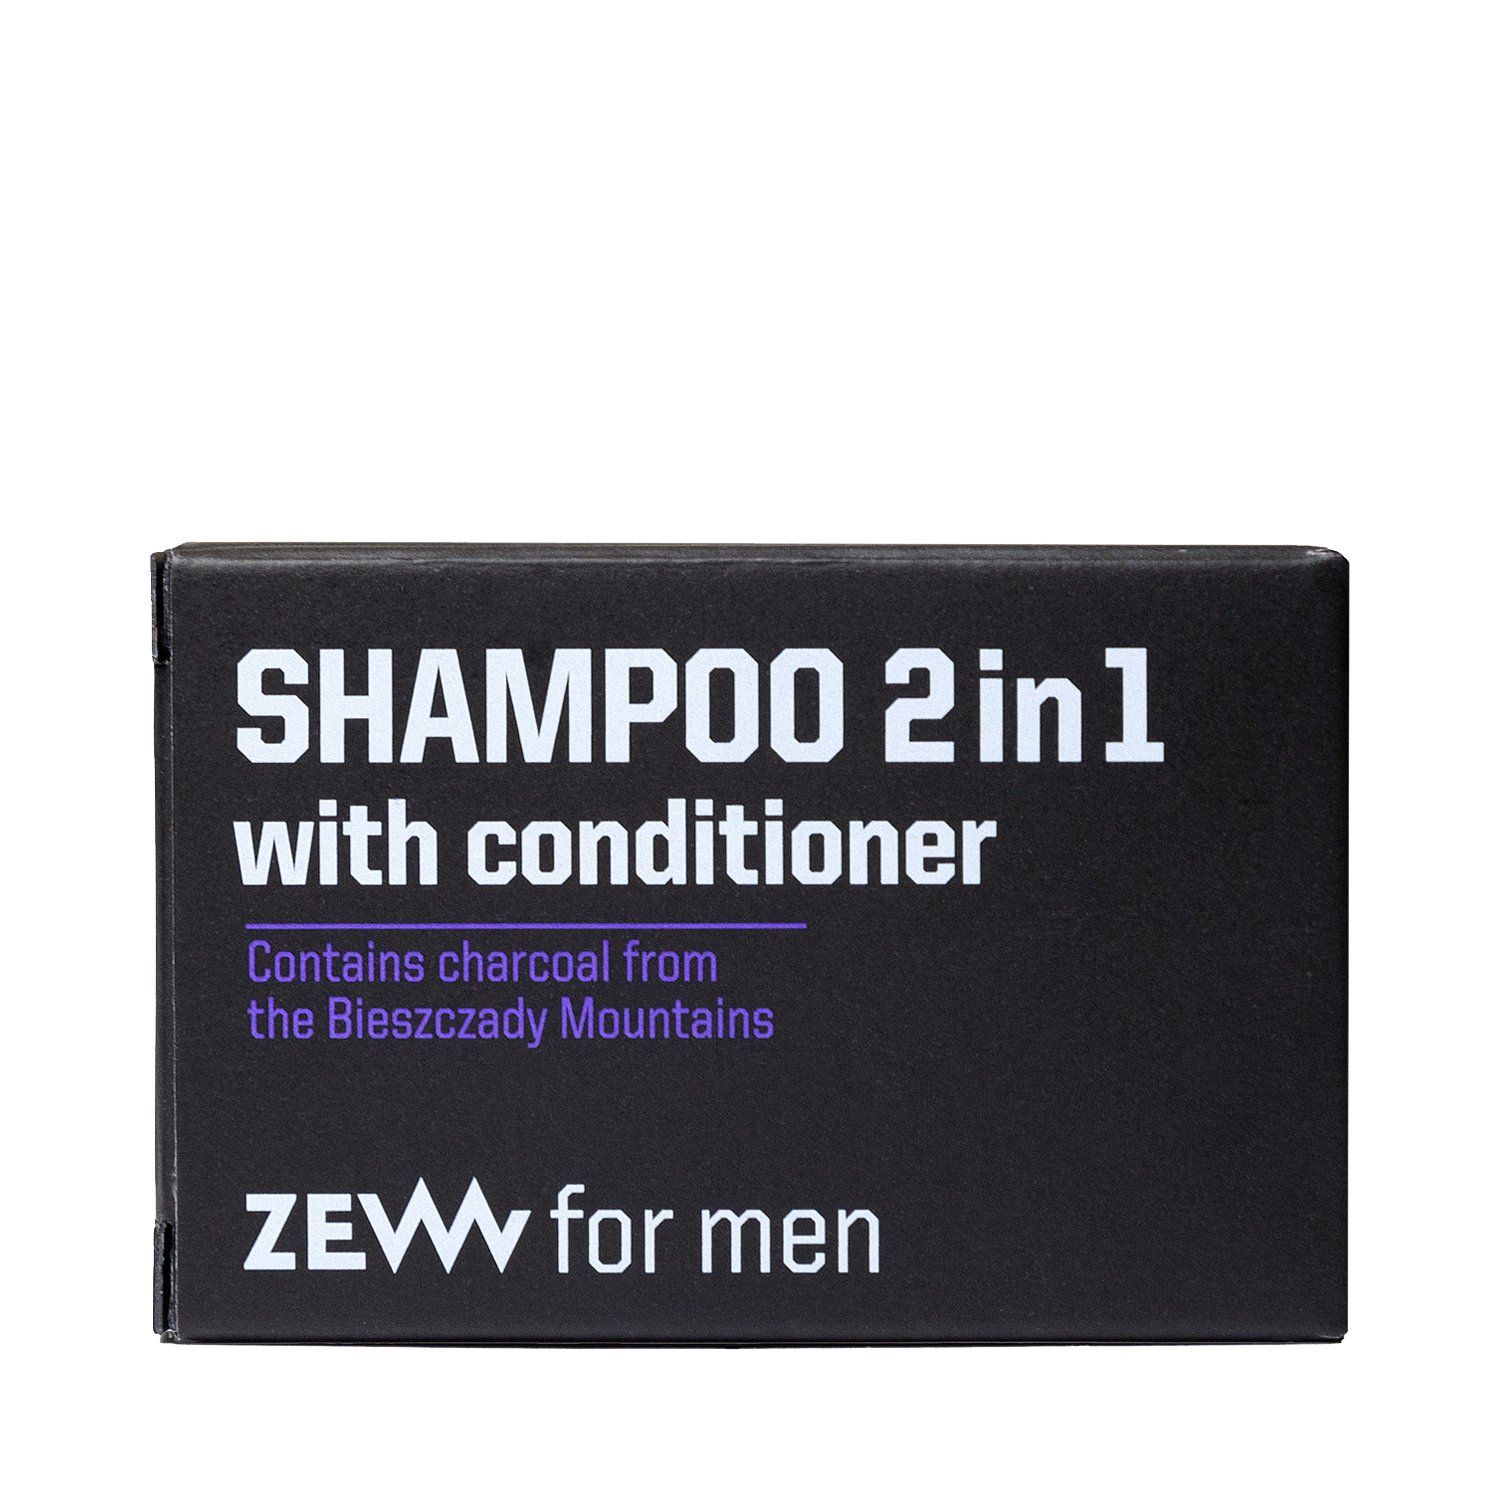 ZEW for men - Shampoo 2in1 with conditioner - 2in1 Shampoo & Conditioner mit Aktivkohle